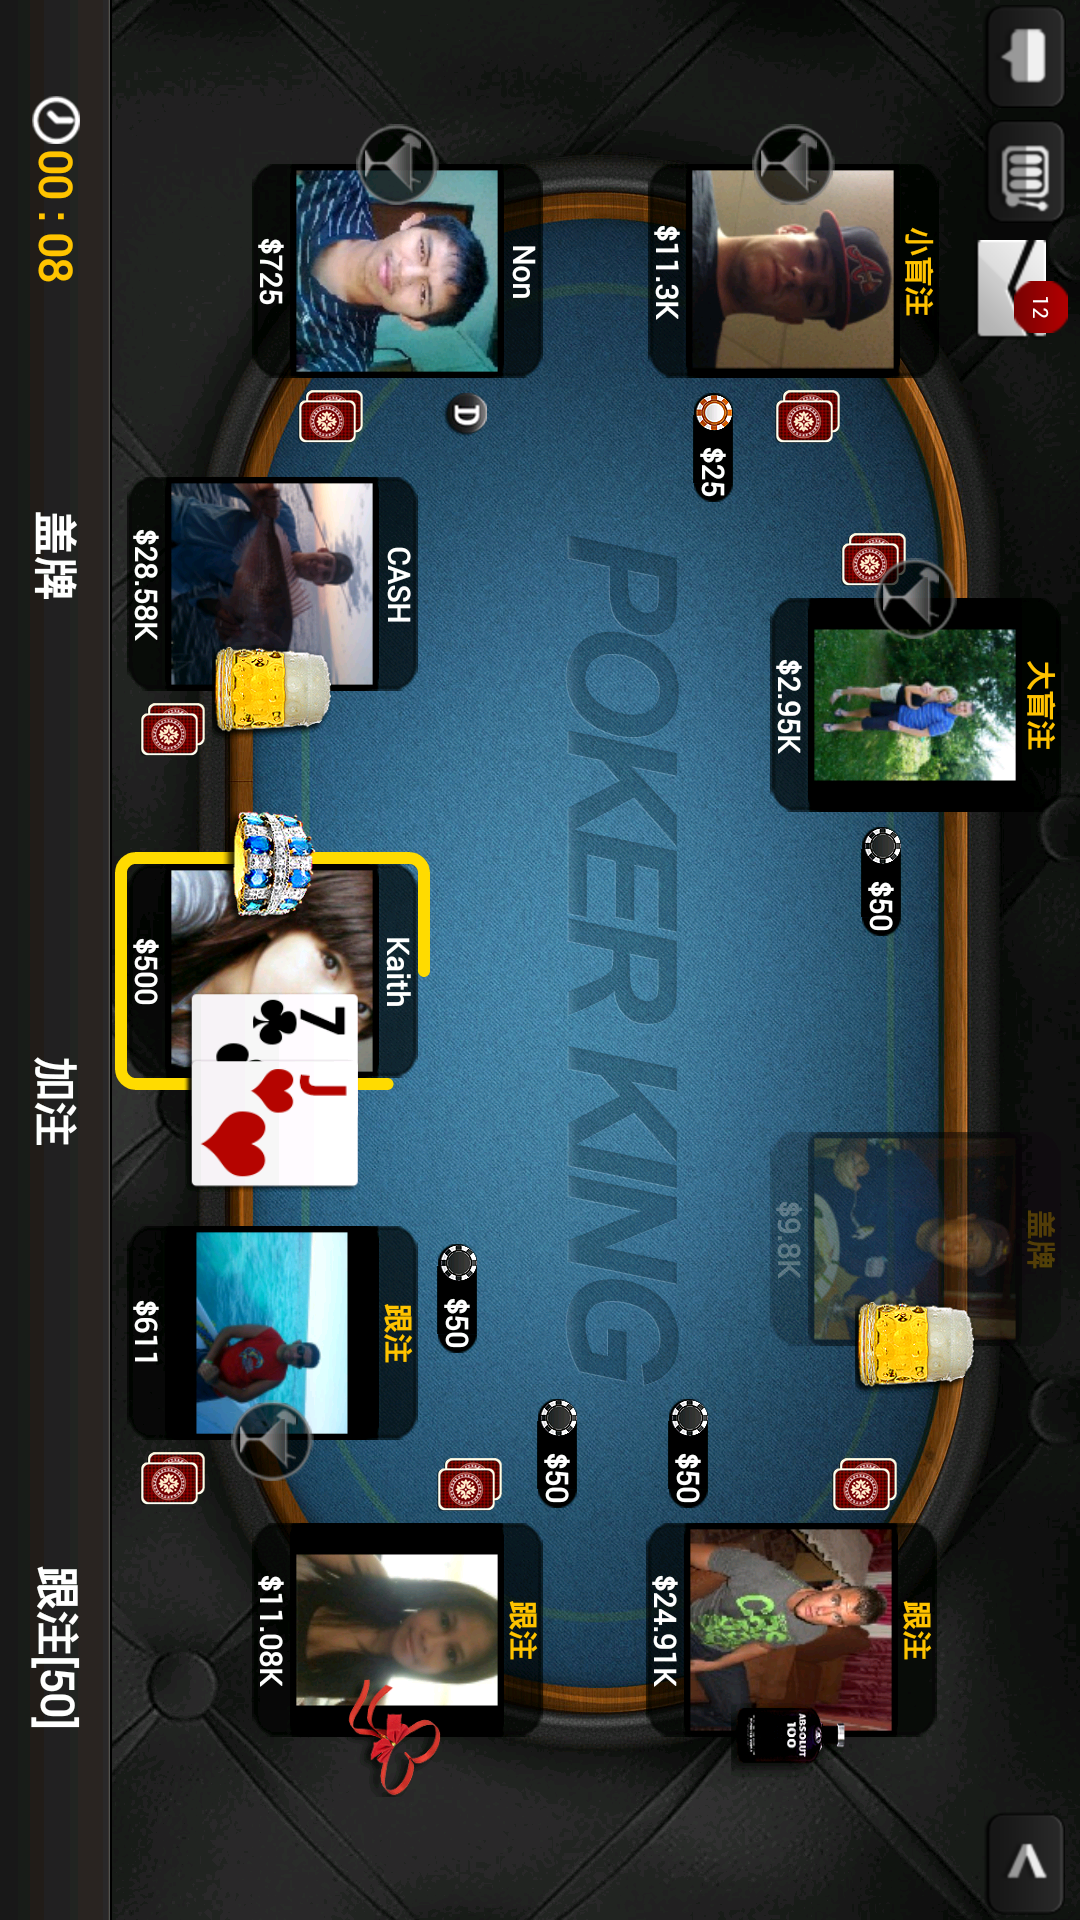 Android application Texas Holdem Poker-Poker KinG screenshort